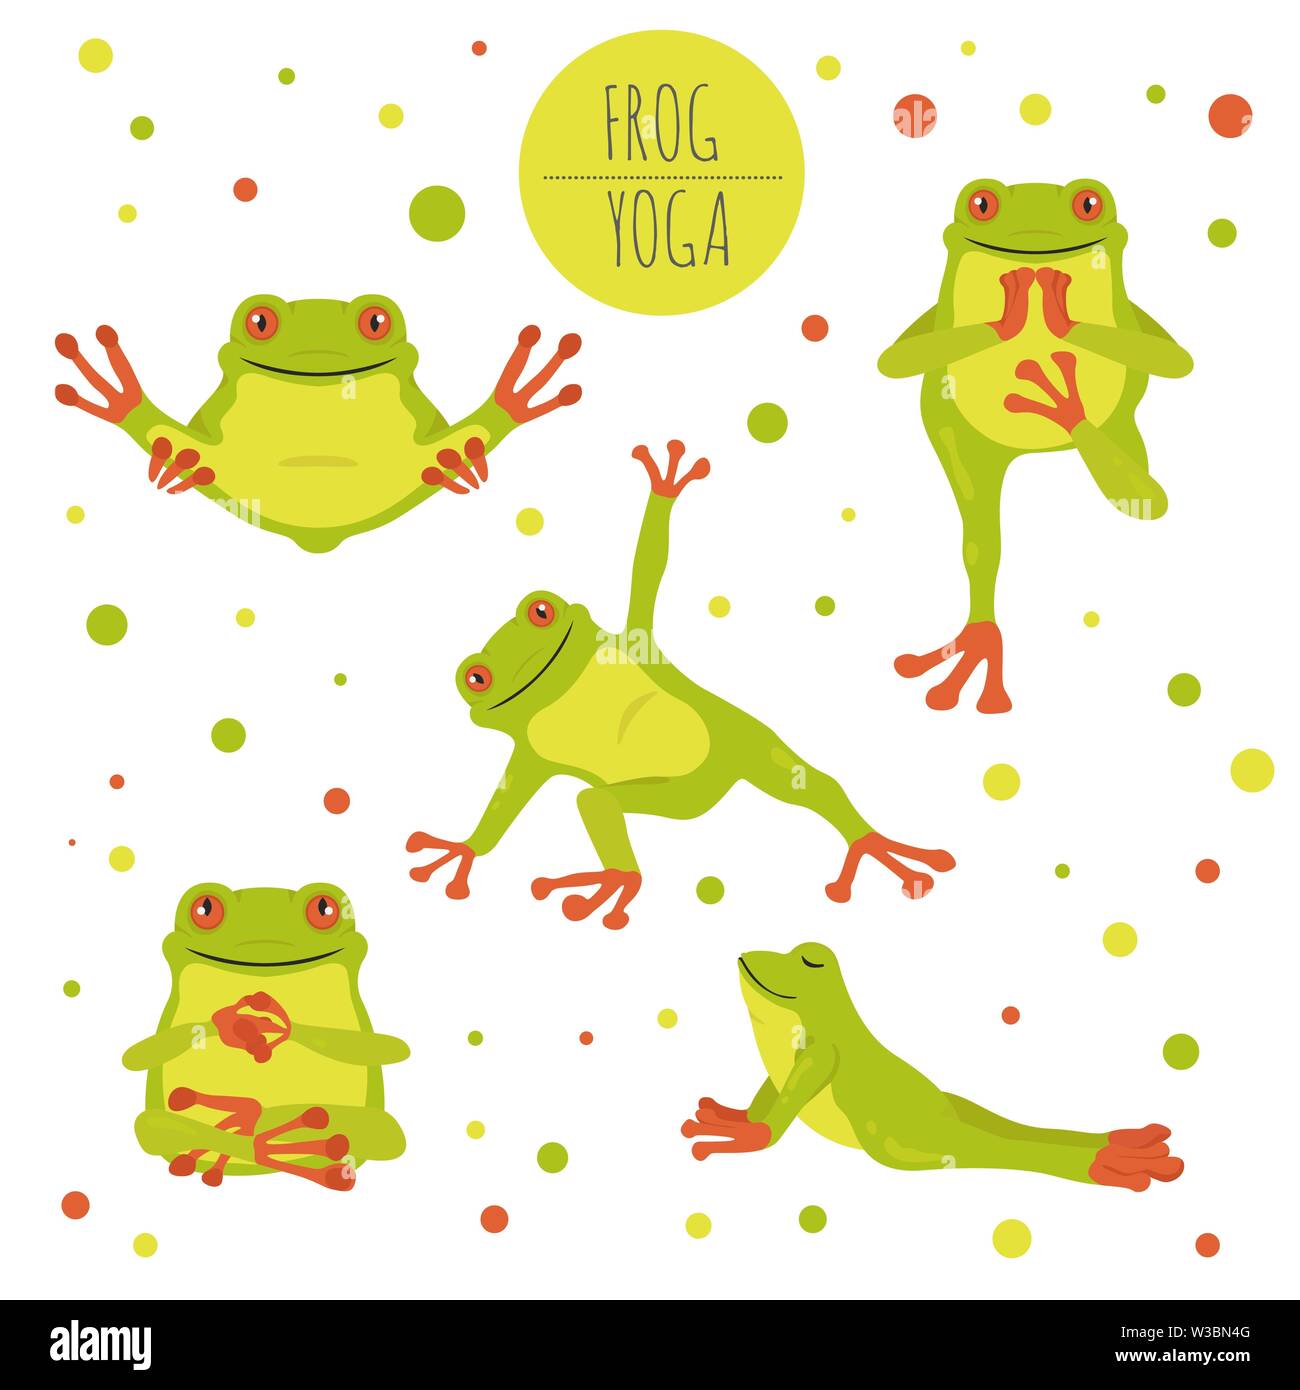 https://c8.alamy.com/comp/W3BN4G/frog-yoga-poses-and-exercises-cute-cartoon-clipart-set-vector-illustration-W3BN4G.jpg